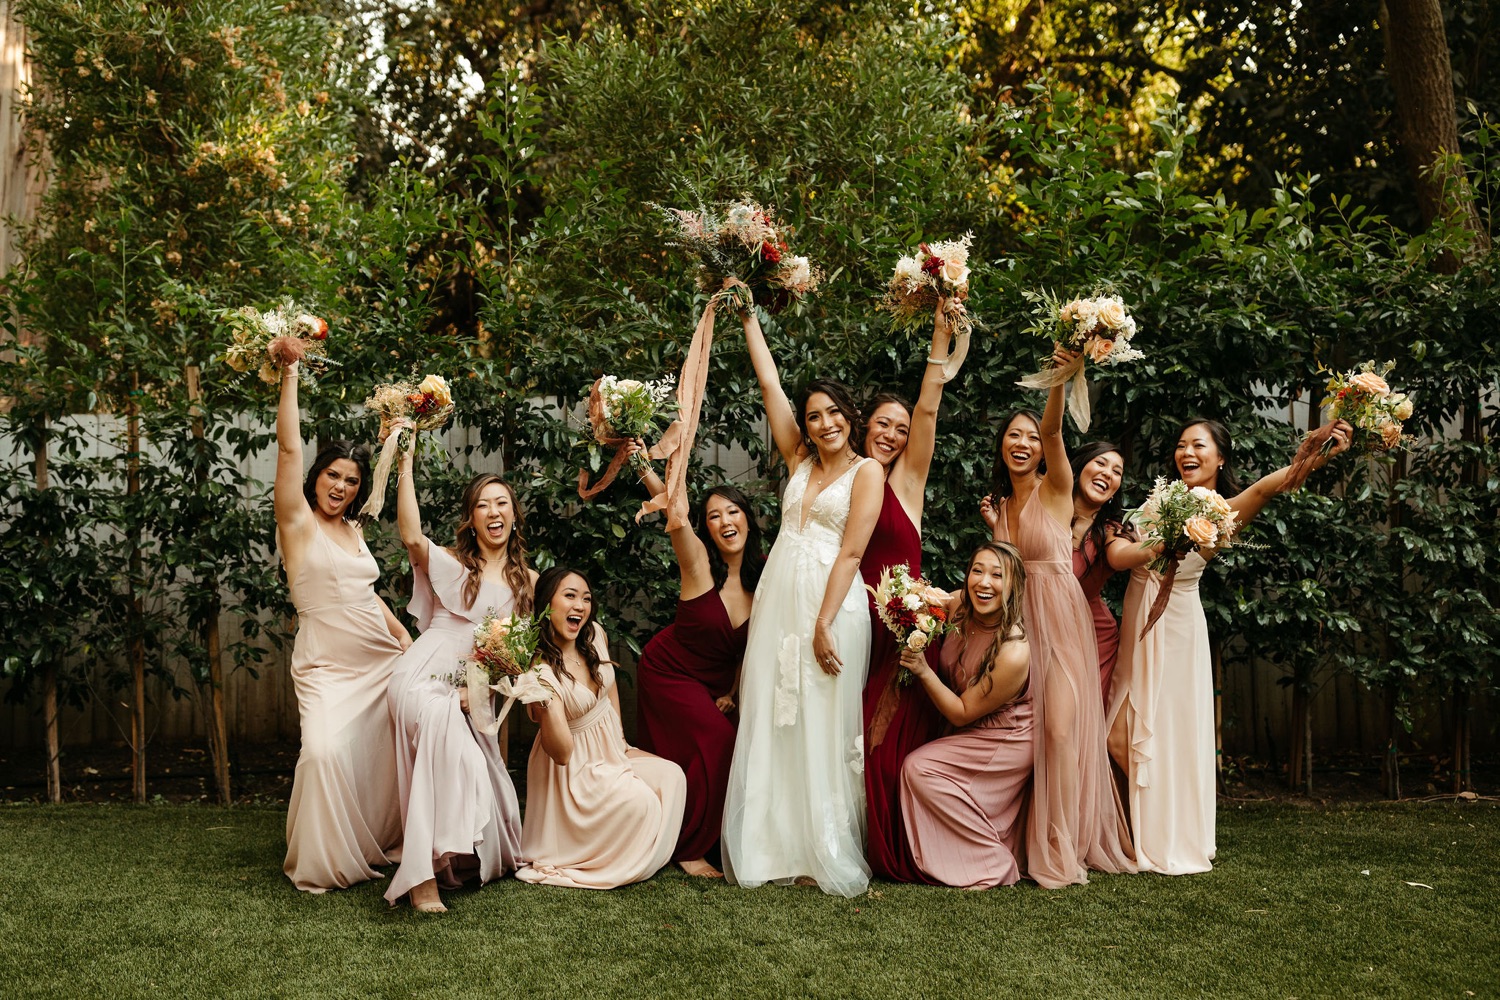 fun bridesmaids photos in blush tones